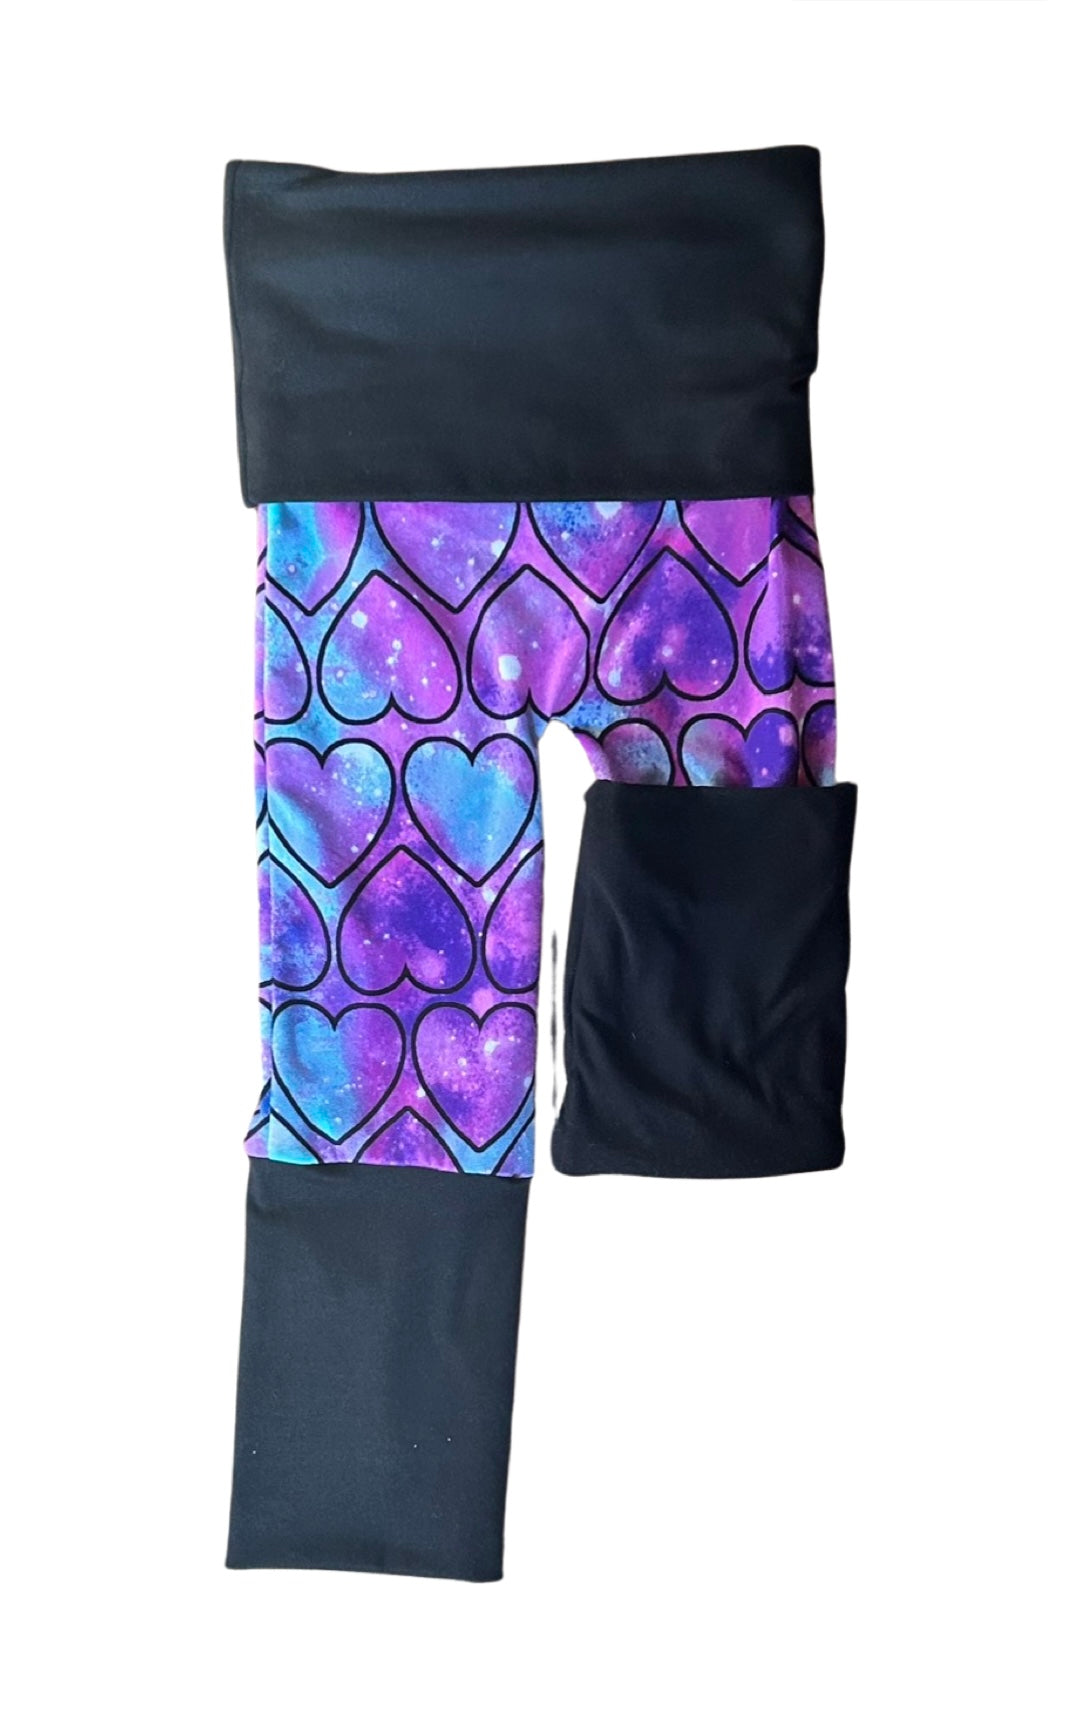 Adjustable Pants - Tie Dye Hearts with Black